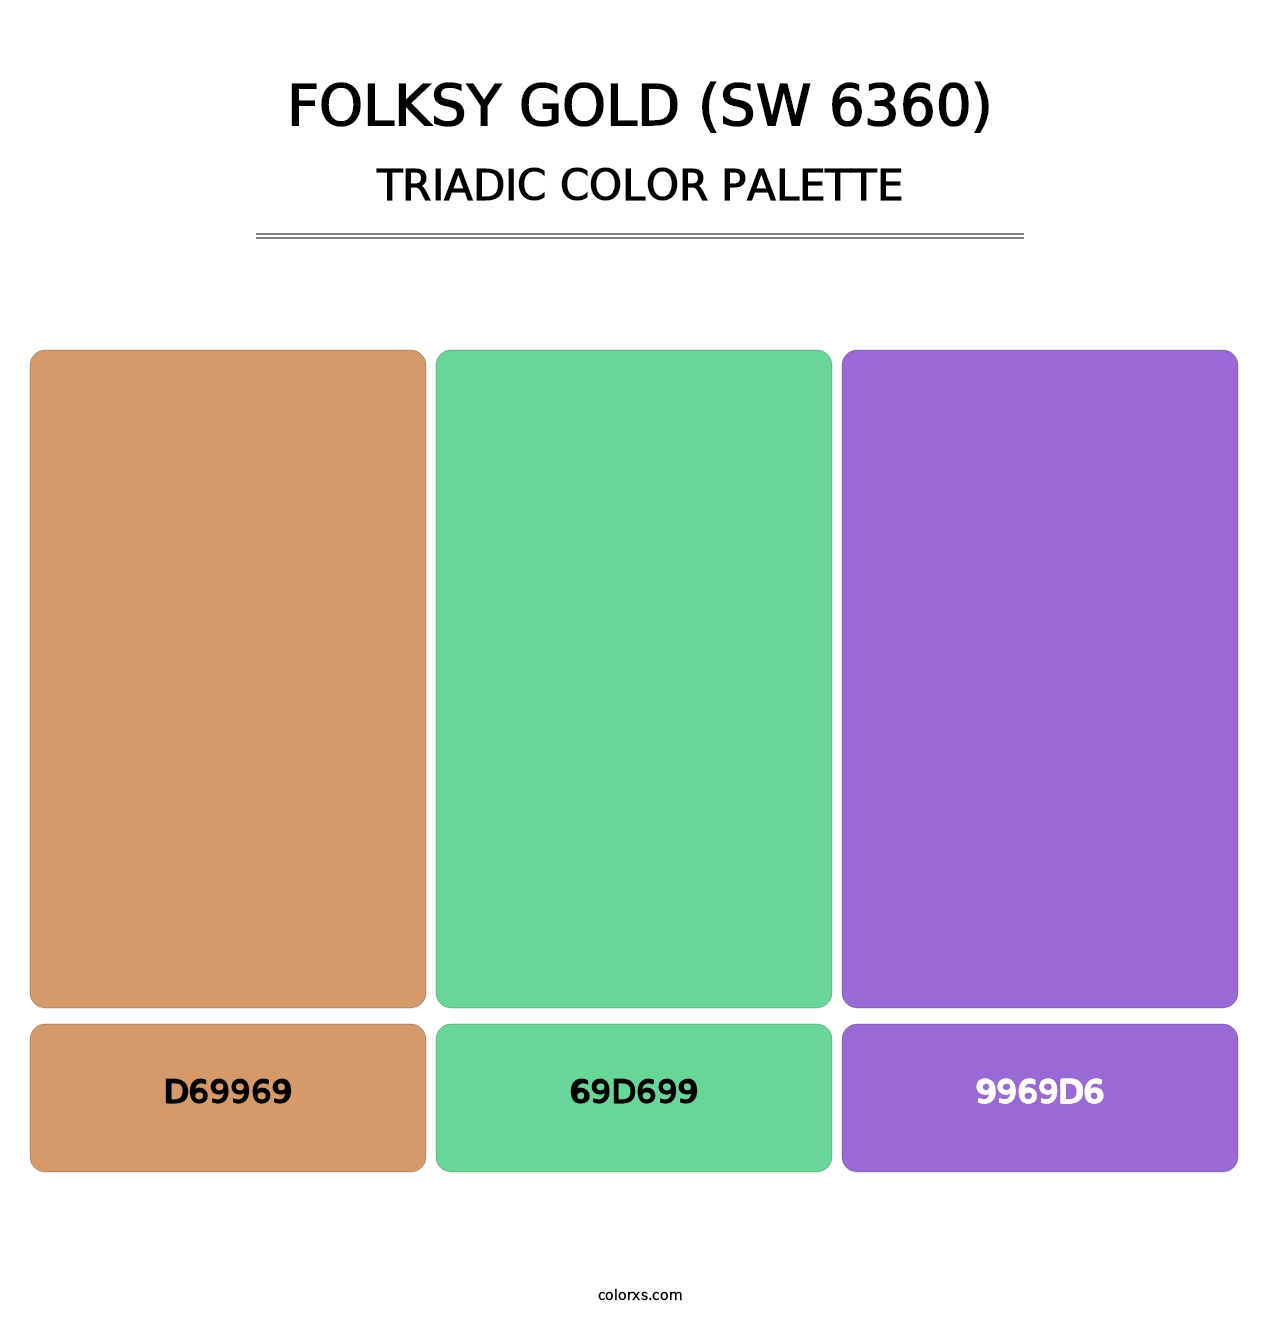 Folksy Gold (SW 6360) - Triadic Color Palette